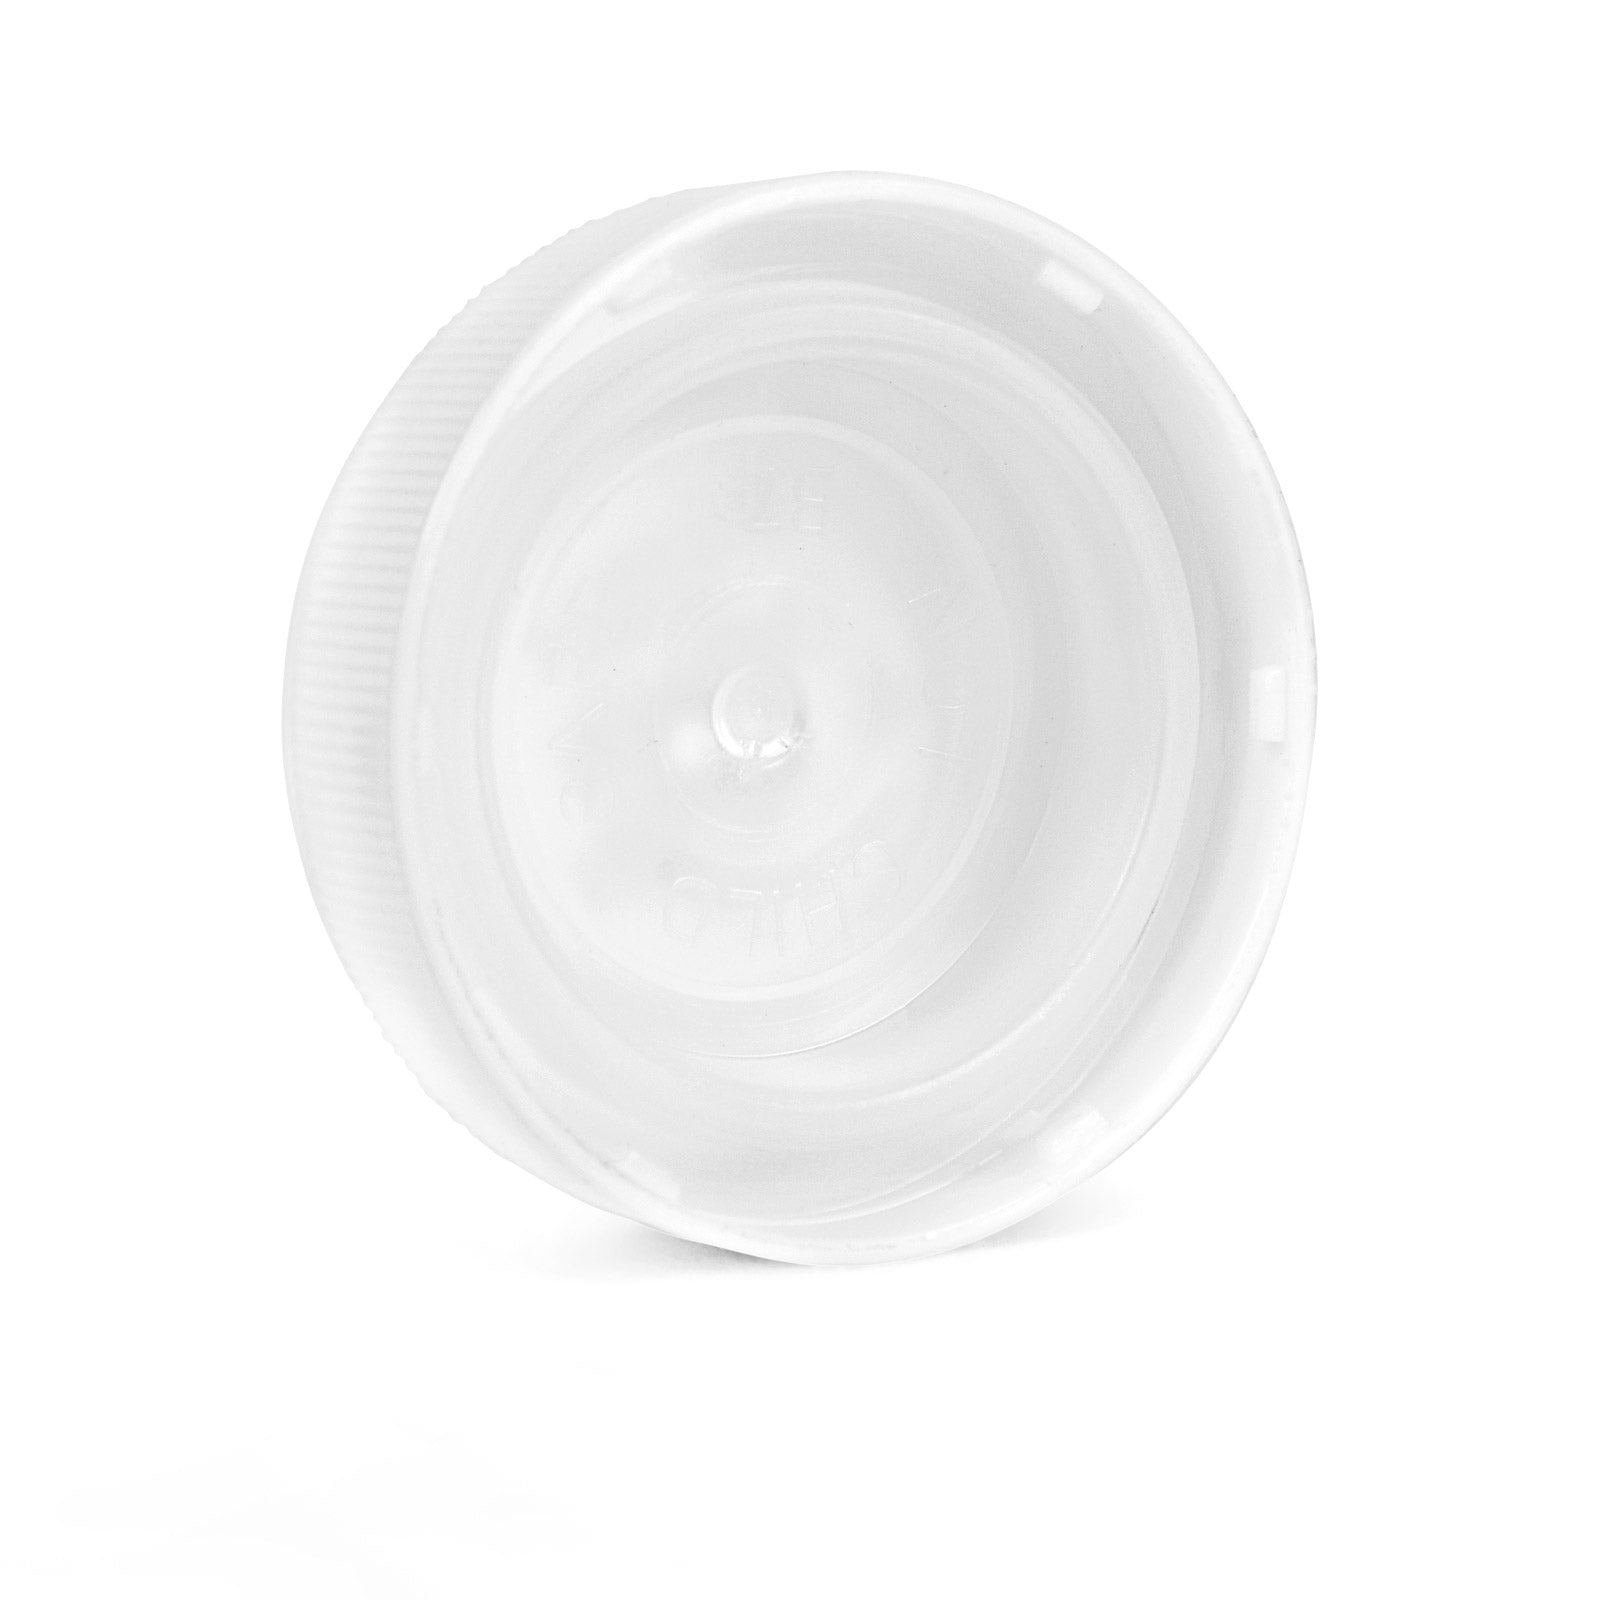 30 Dram Reversible Cap Opaque White - 1 Count